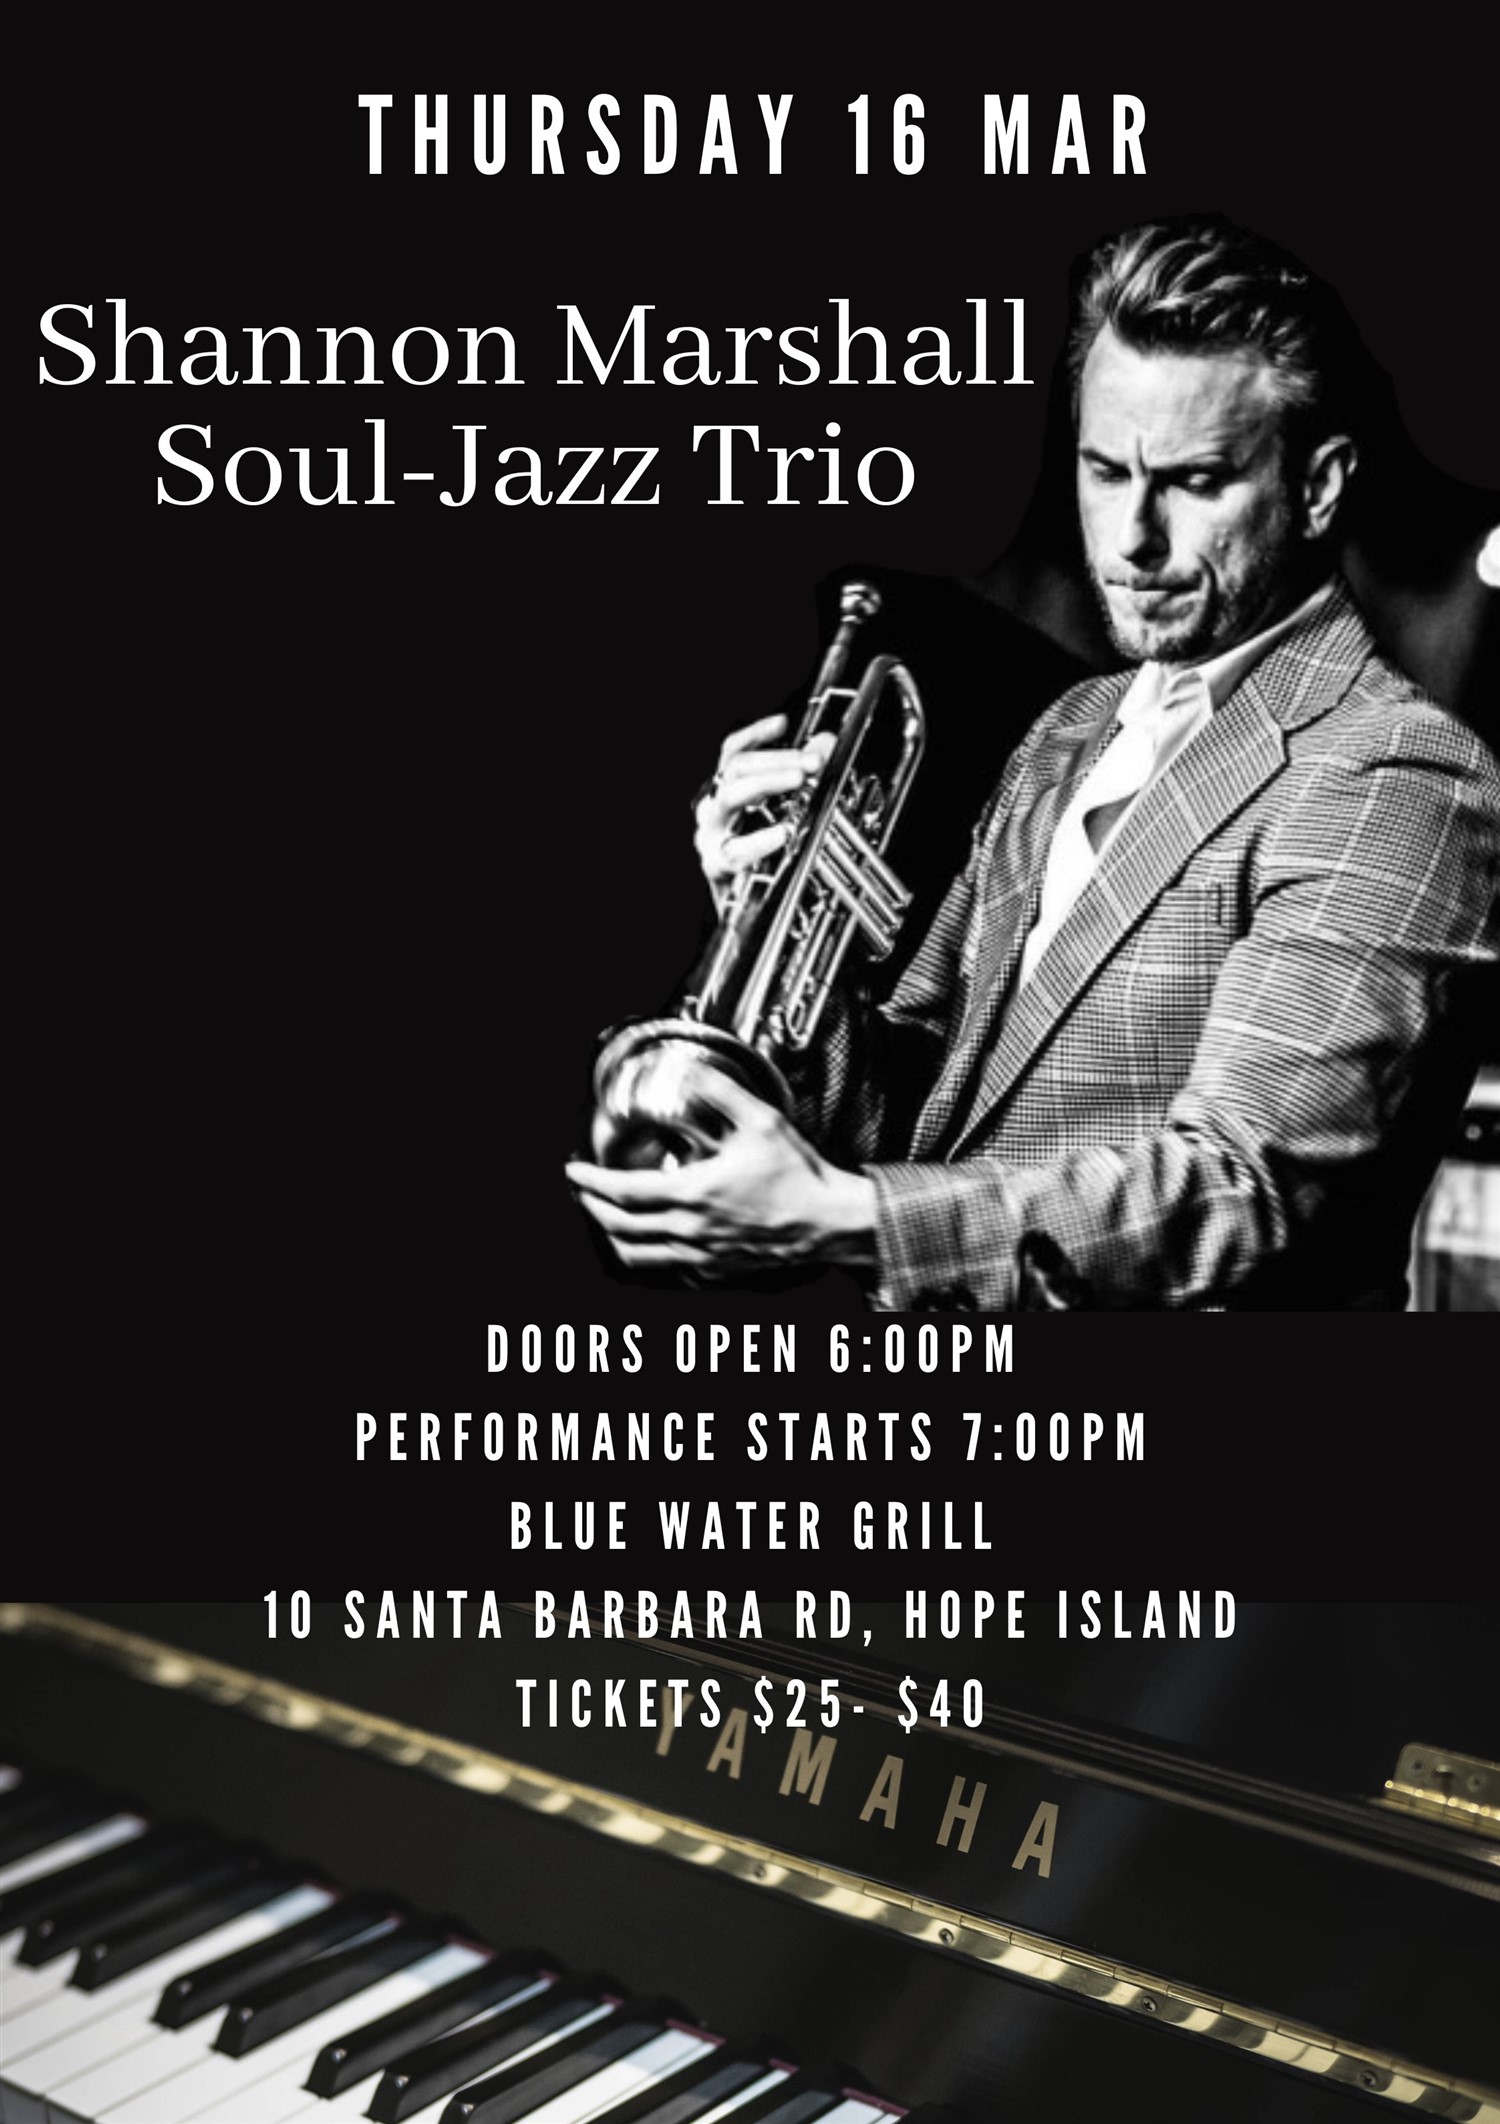 The Shannon Marshall Soul-Jazz Trio  on mar. 16, 18:00@Hope Island Jazz - Blue Water Grill - Compra entradas y obtén información enHope Island Jazz hopeislandjazz.com.au